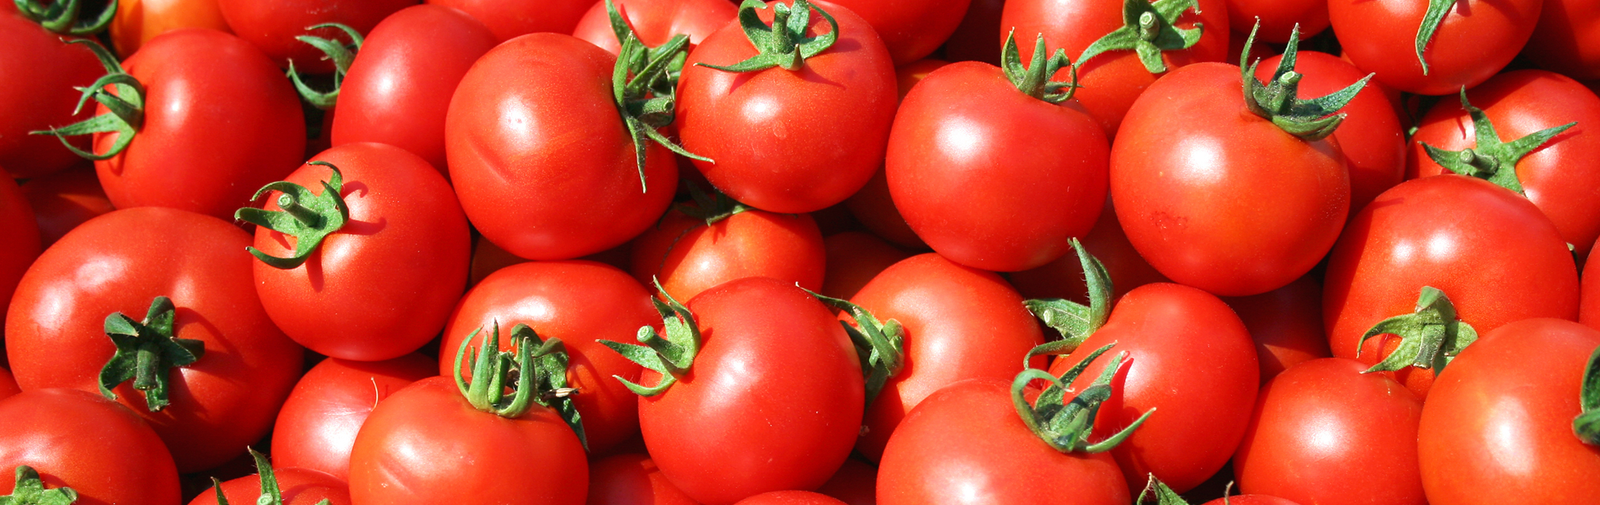 tomato yields case study humic land